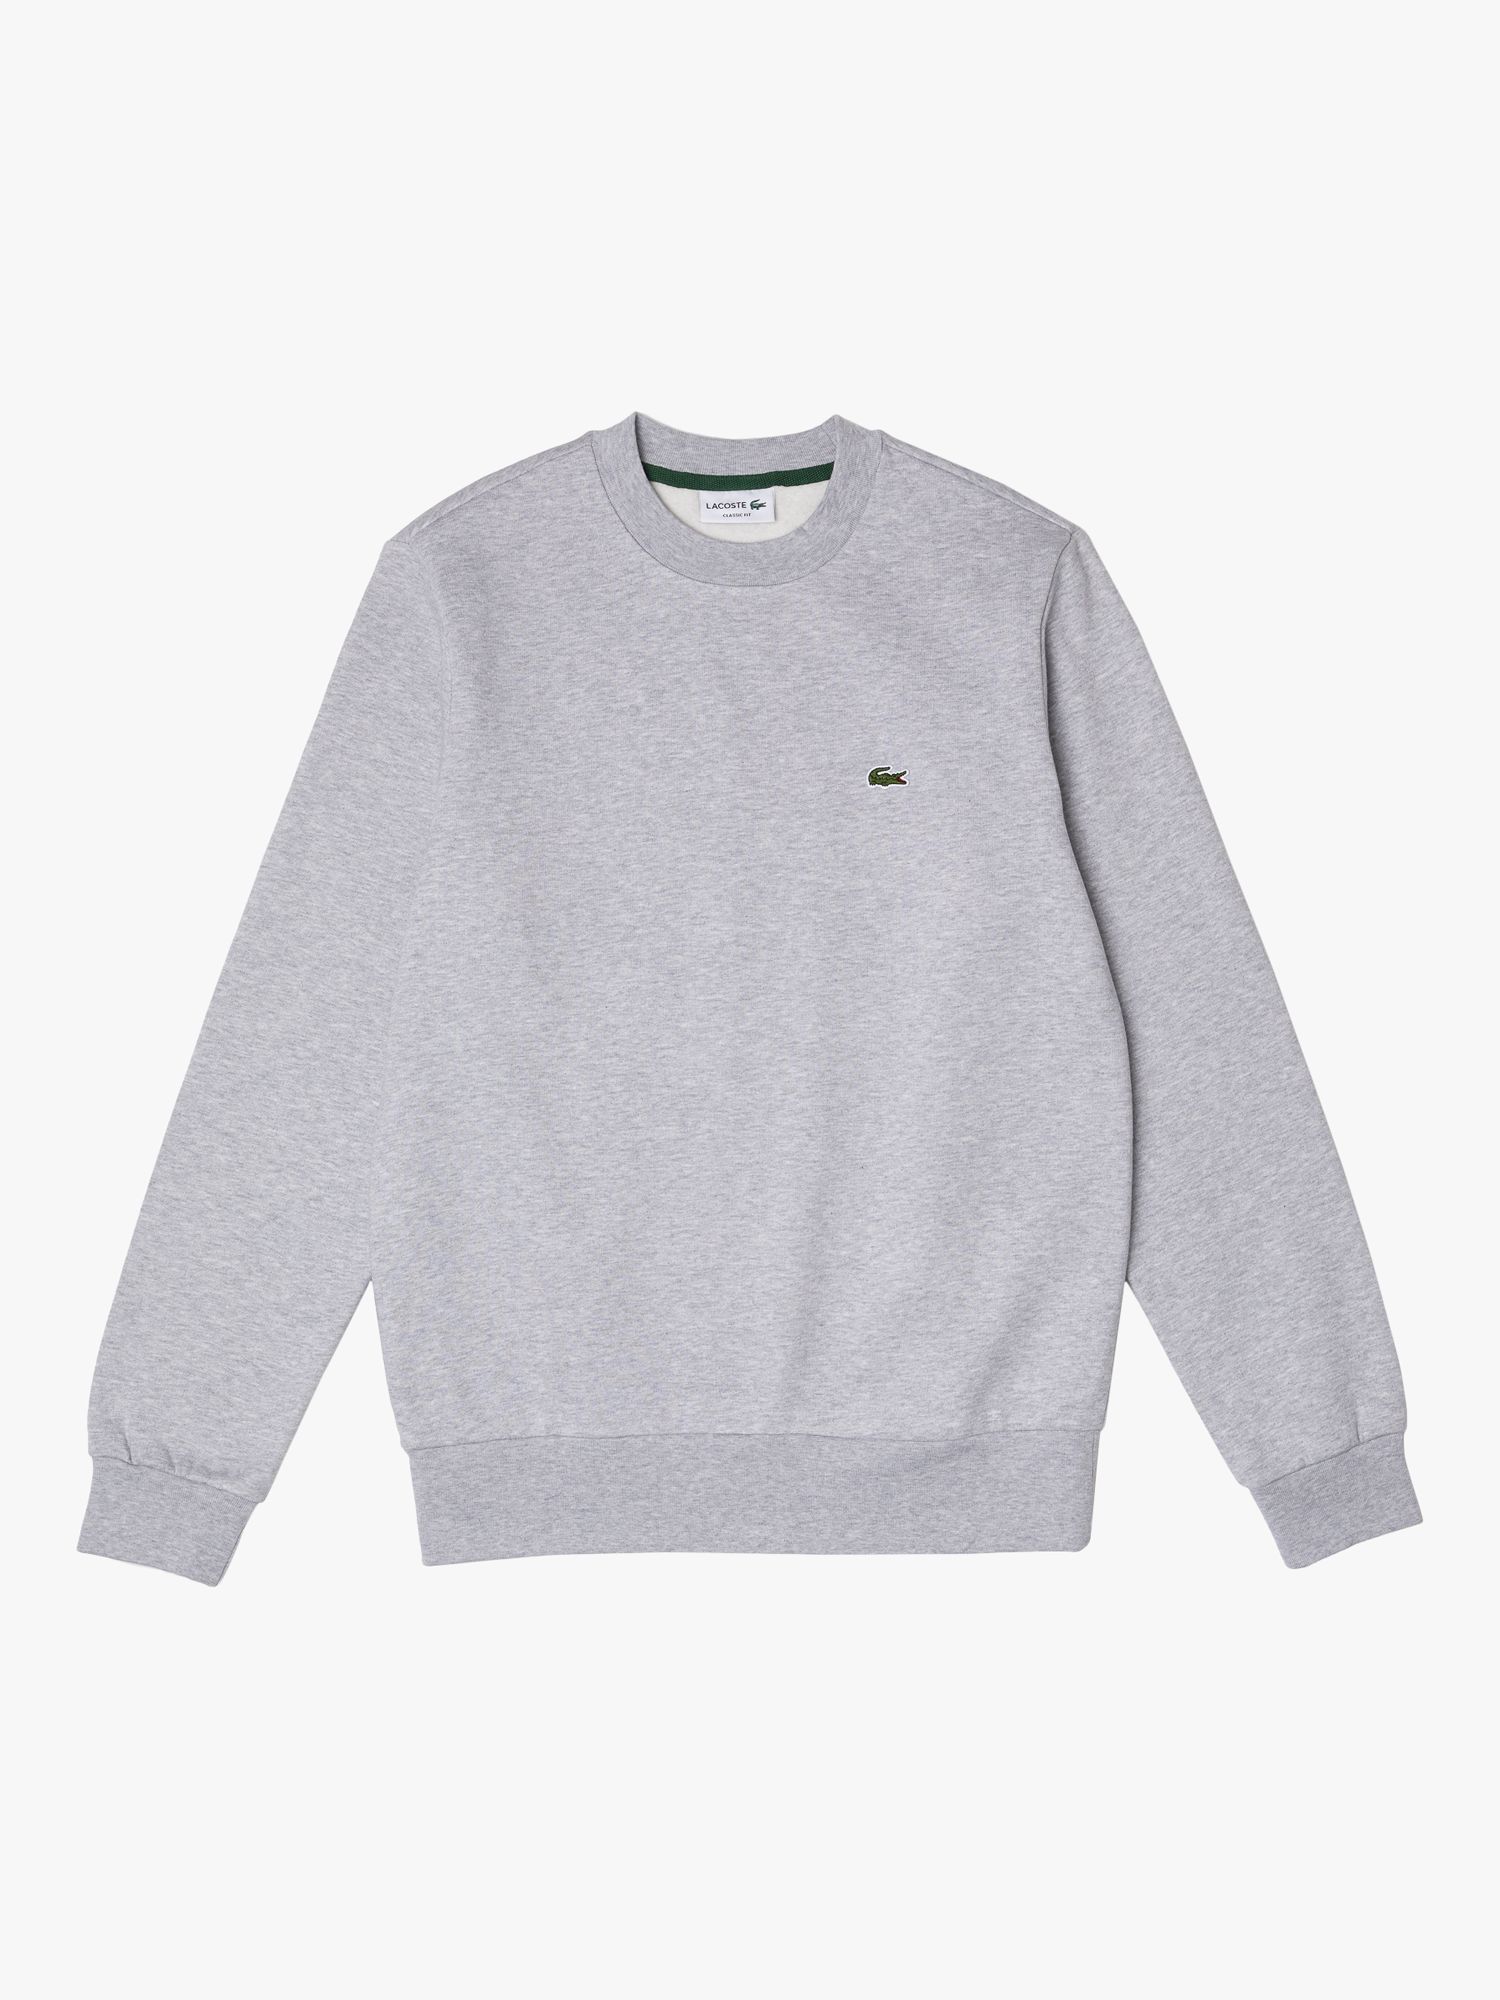 Lacoste Organic Brushed Cotton Sweatshirt, Pale Grey, S